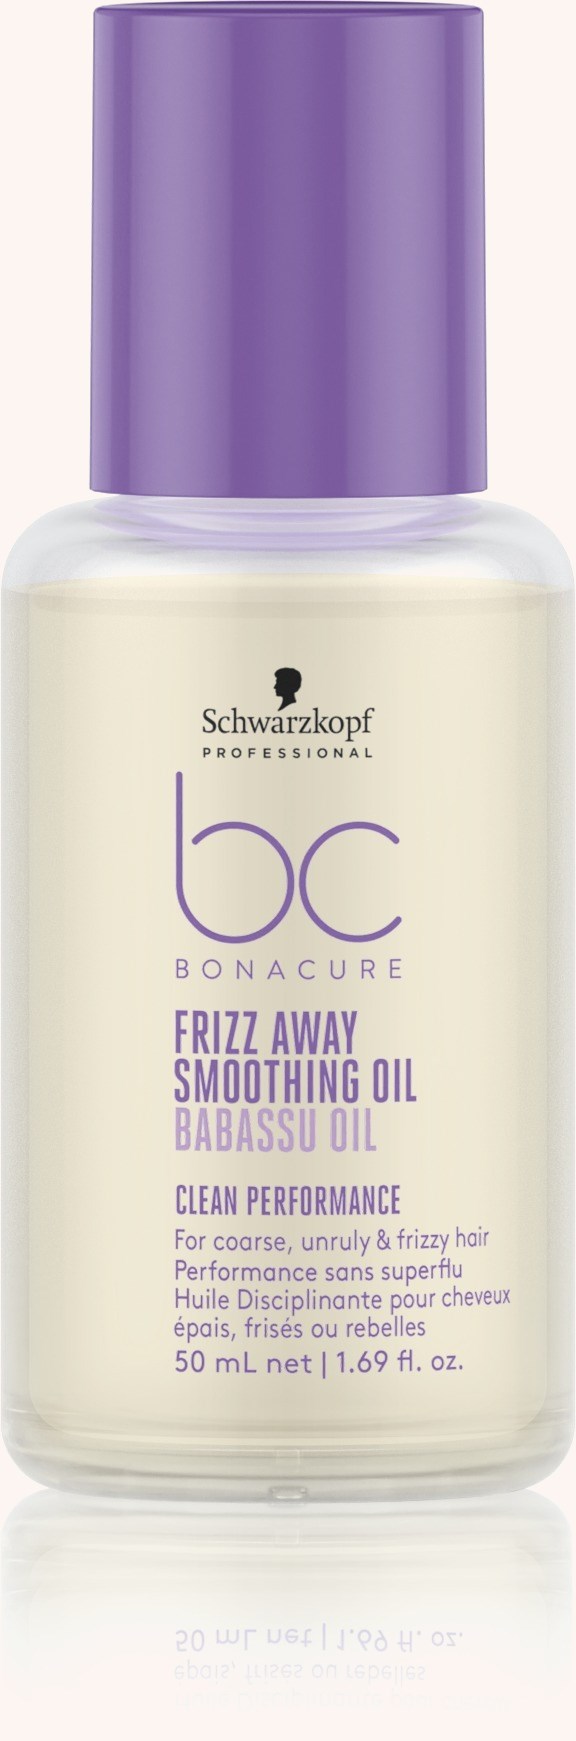 BC Frizz Away Smooth Oil Babassu Oil 50 ml